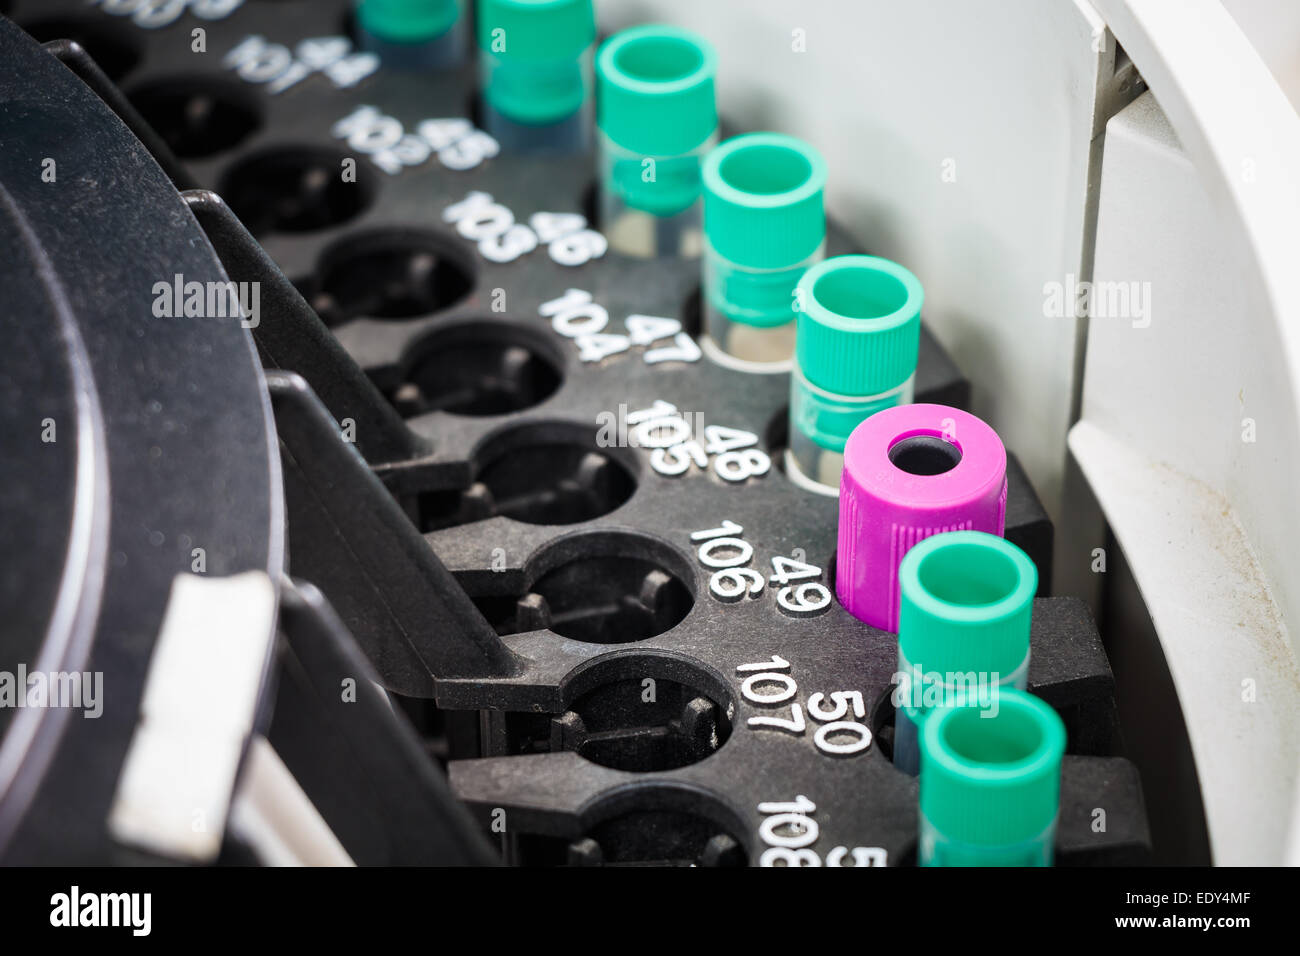 Spinner machine (for spin test tube) in hospital's laboratory (Vignette) Stock Photo